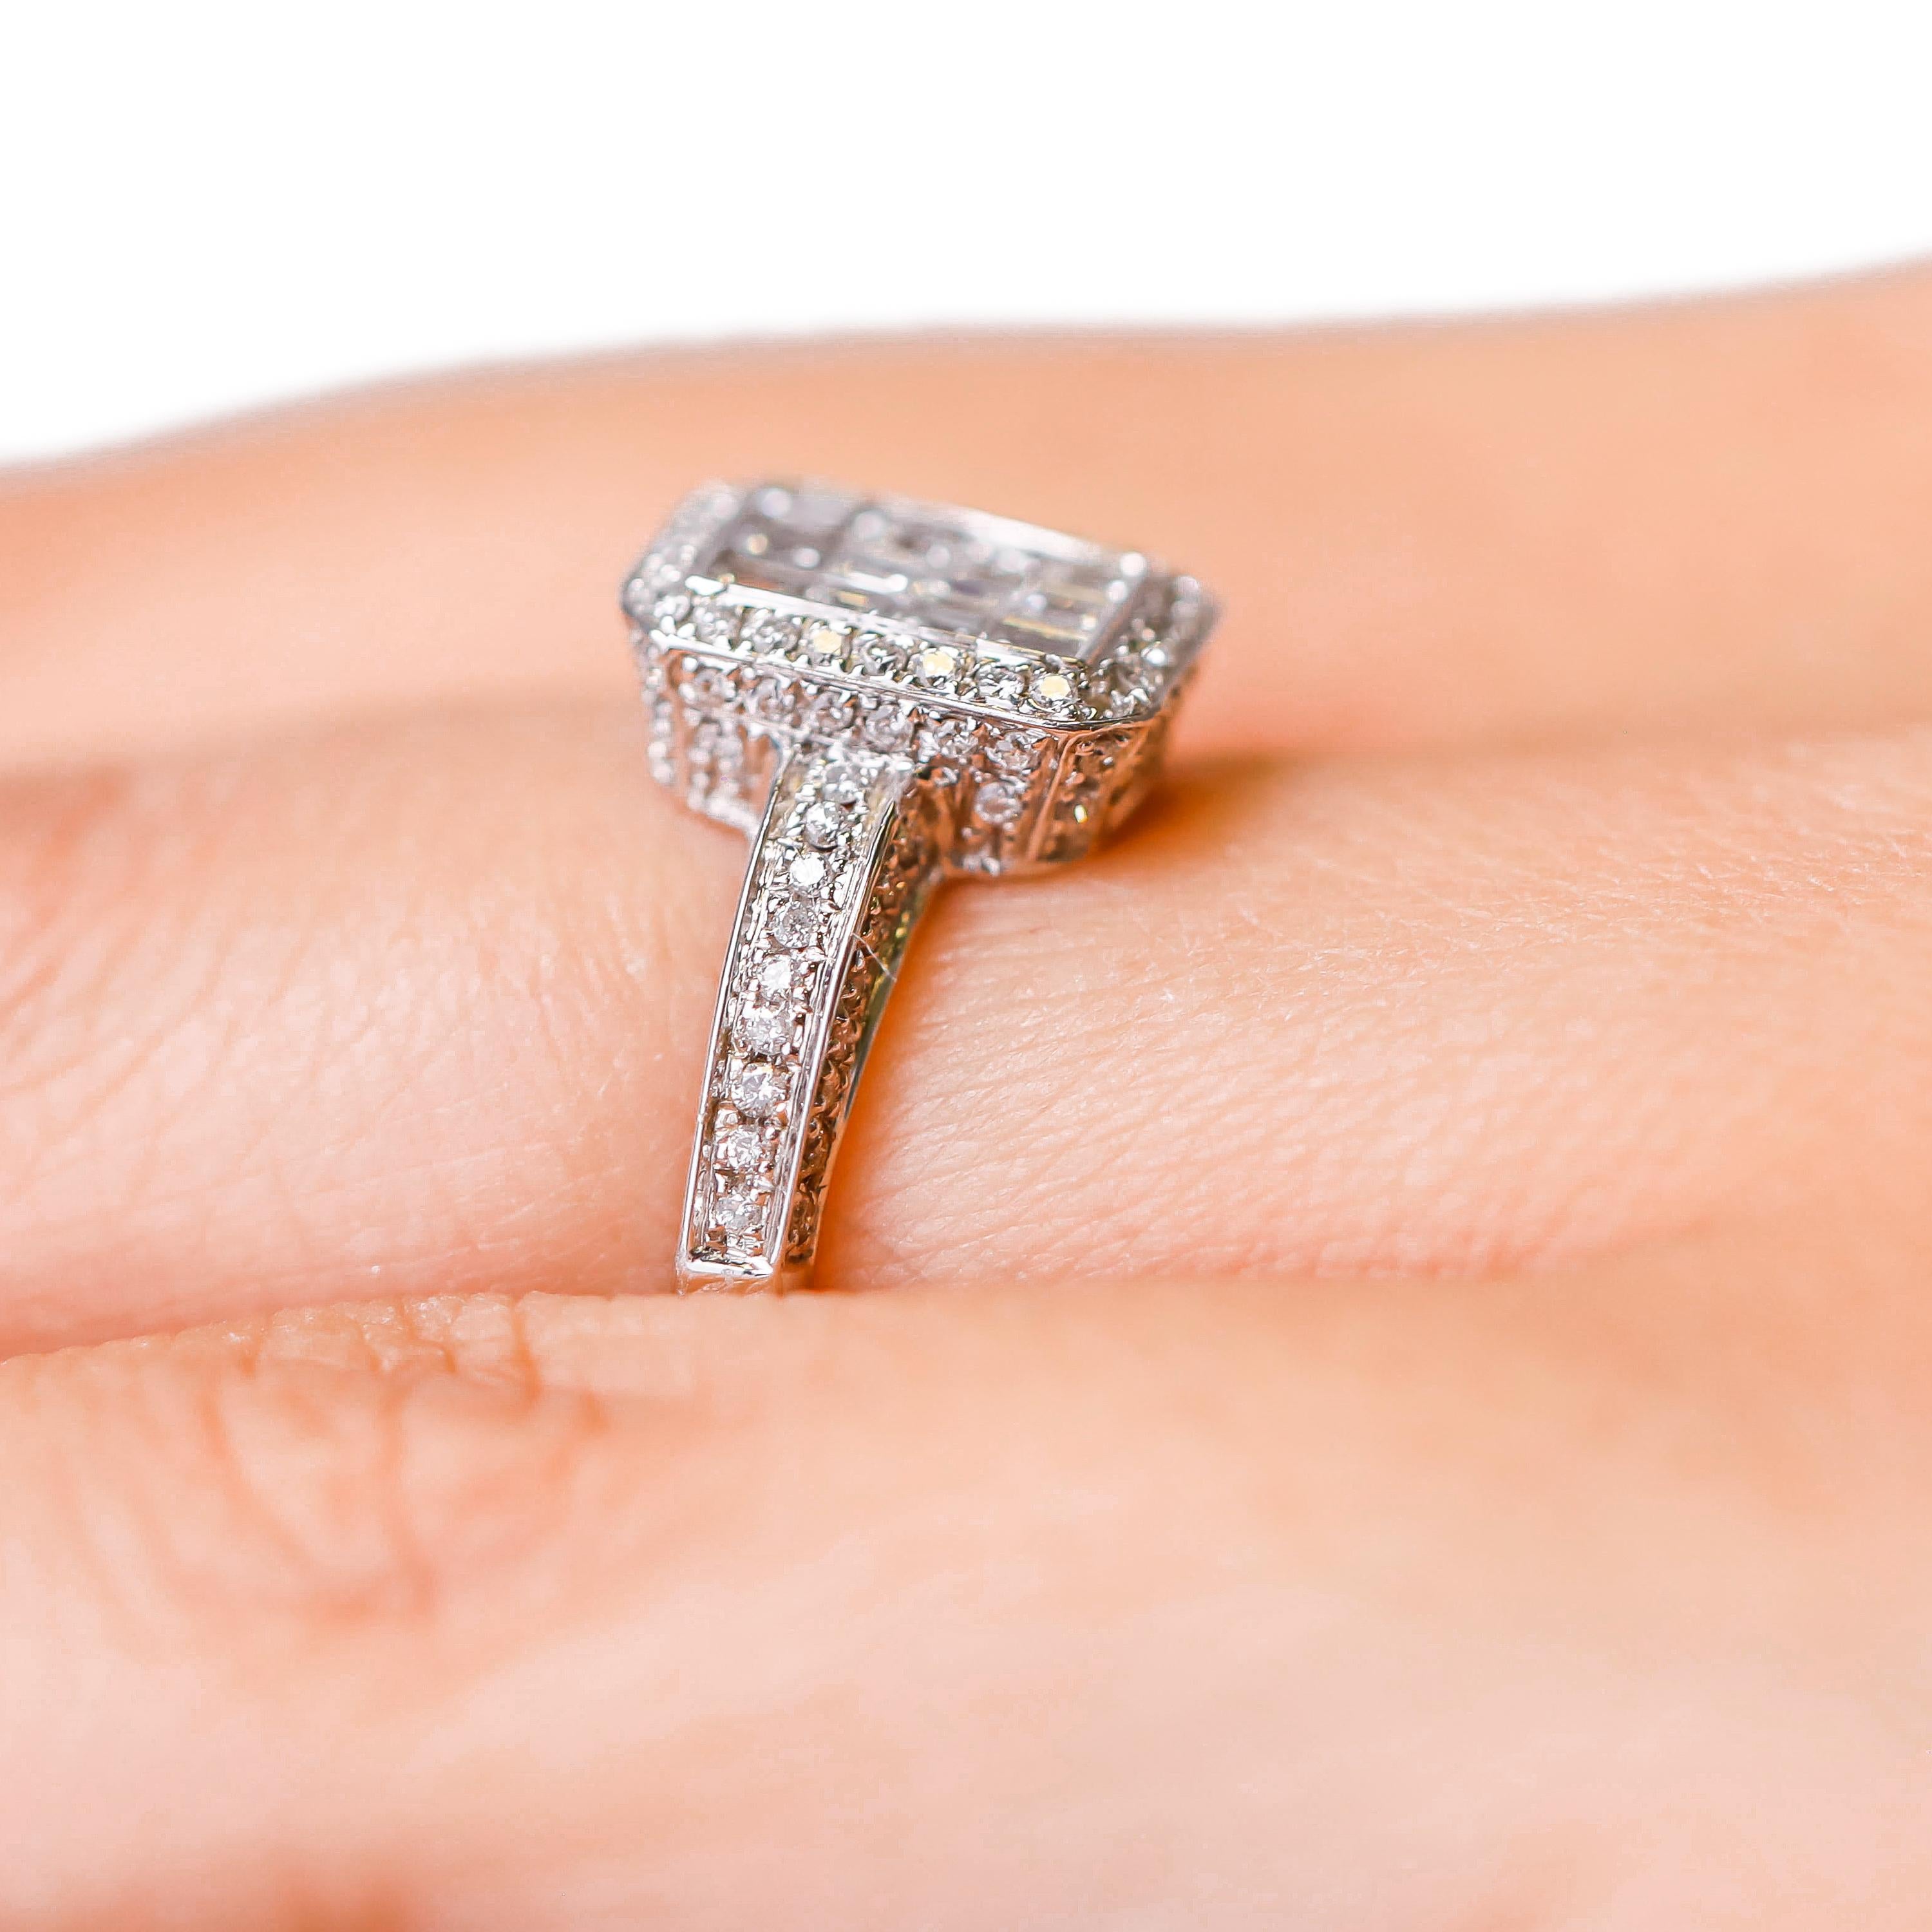 Gregg Ruth 18k White Gold 1.0 Carat Princess Cut Diamond Engagement Ring Sz 6.5 For Sale 5